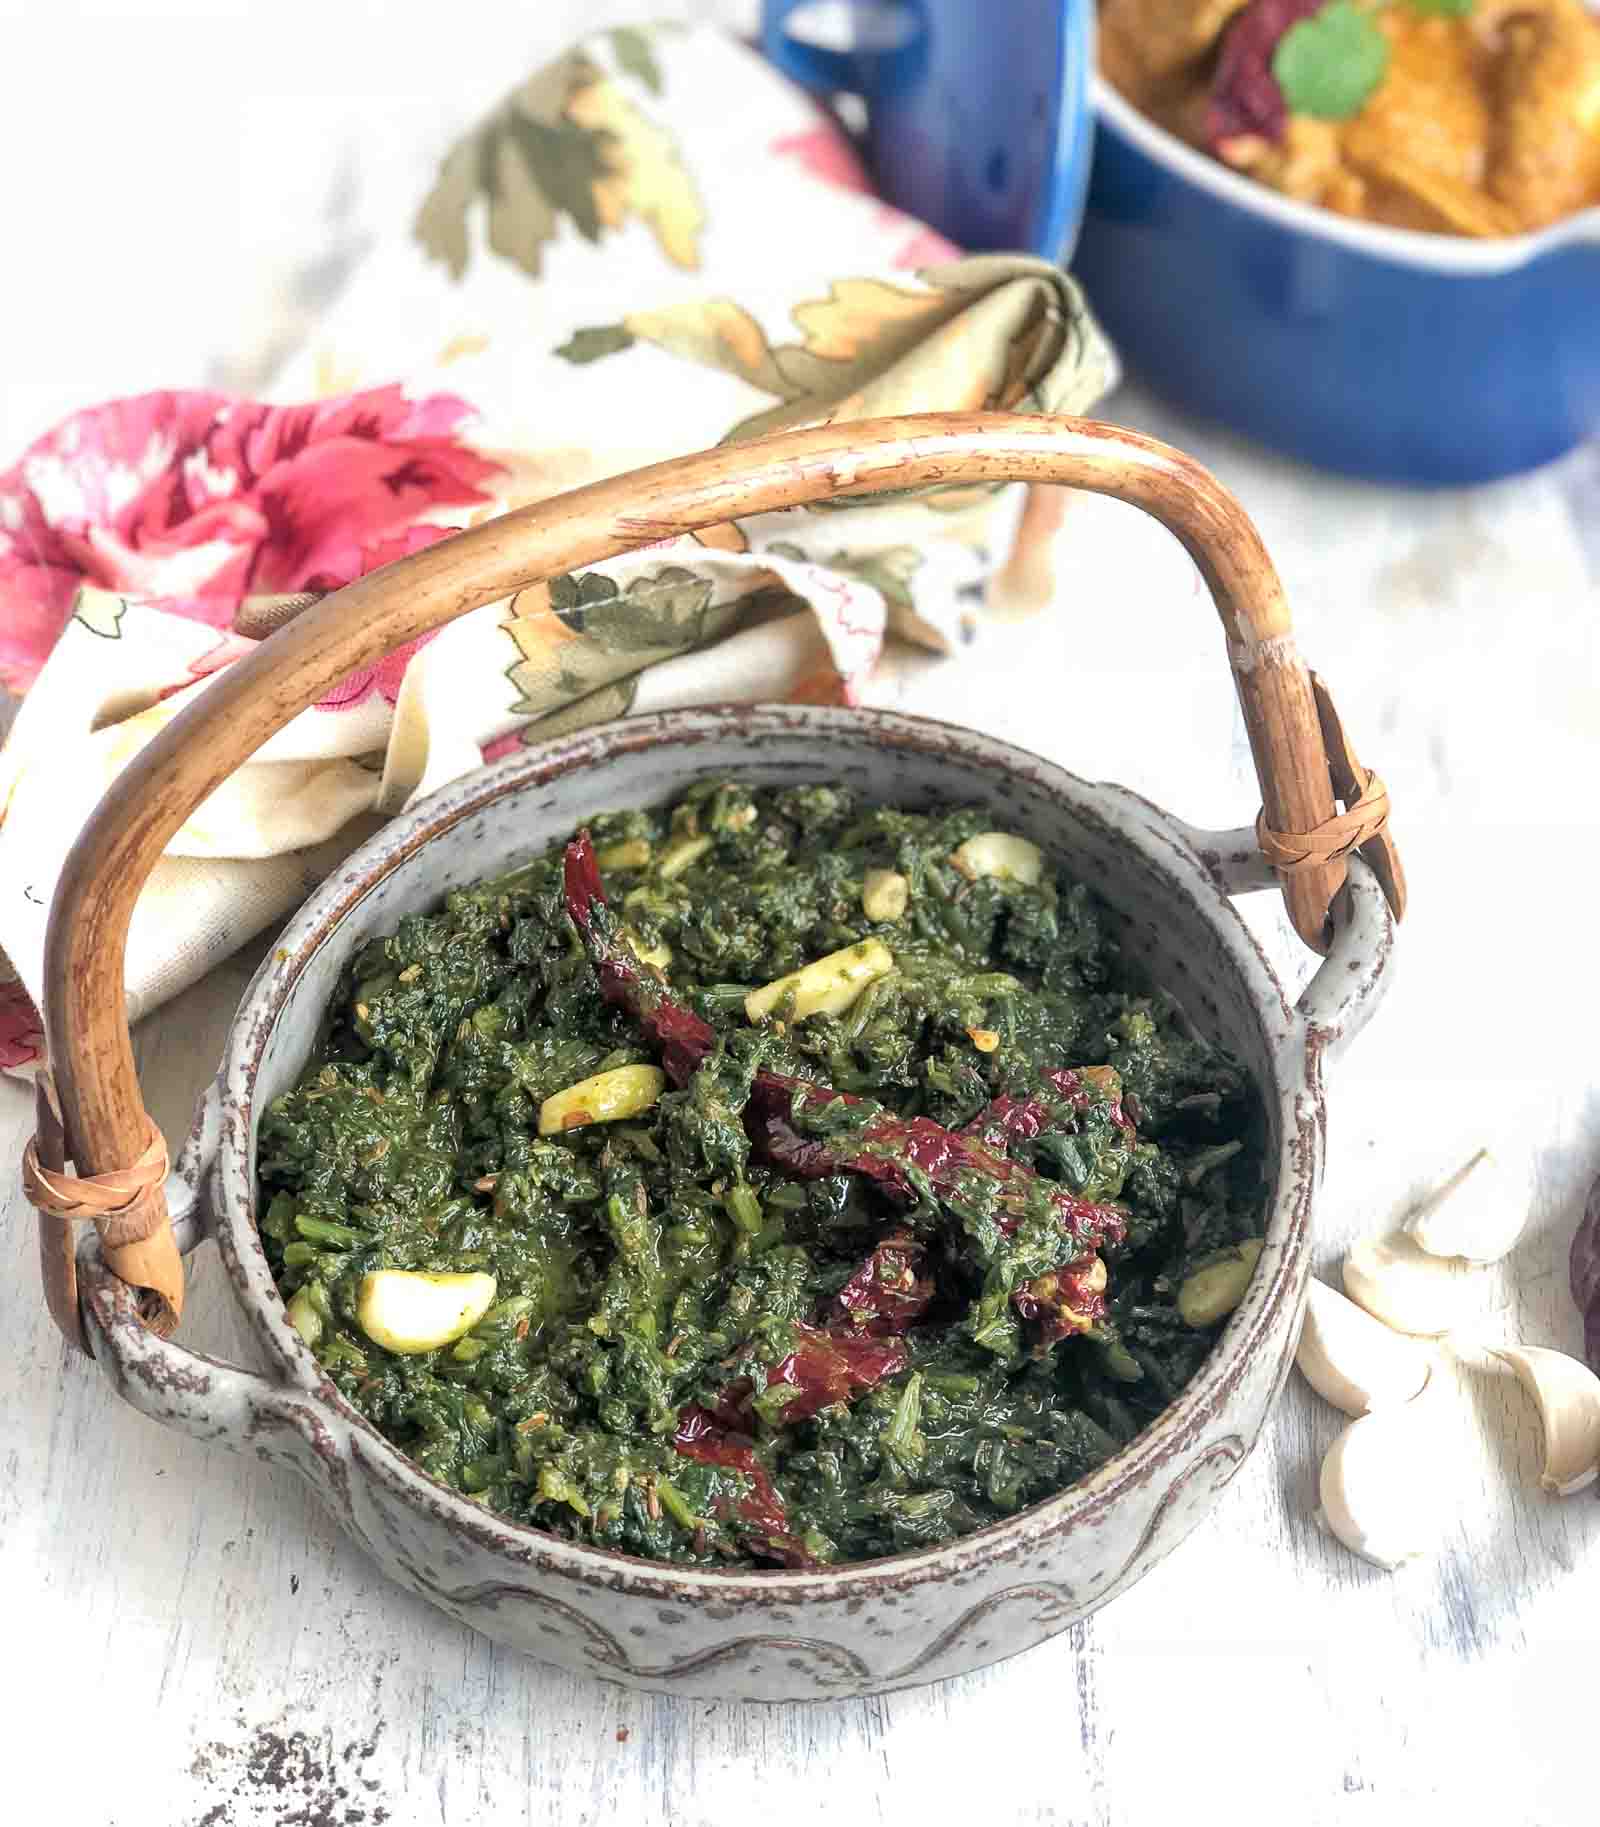 कश्मीरी साग रेसिपी - Kashmiri Saag Recipe